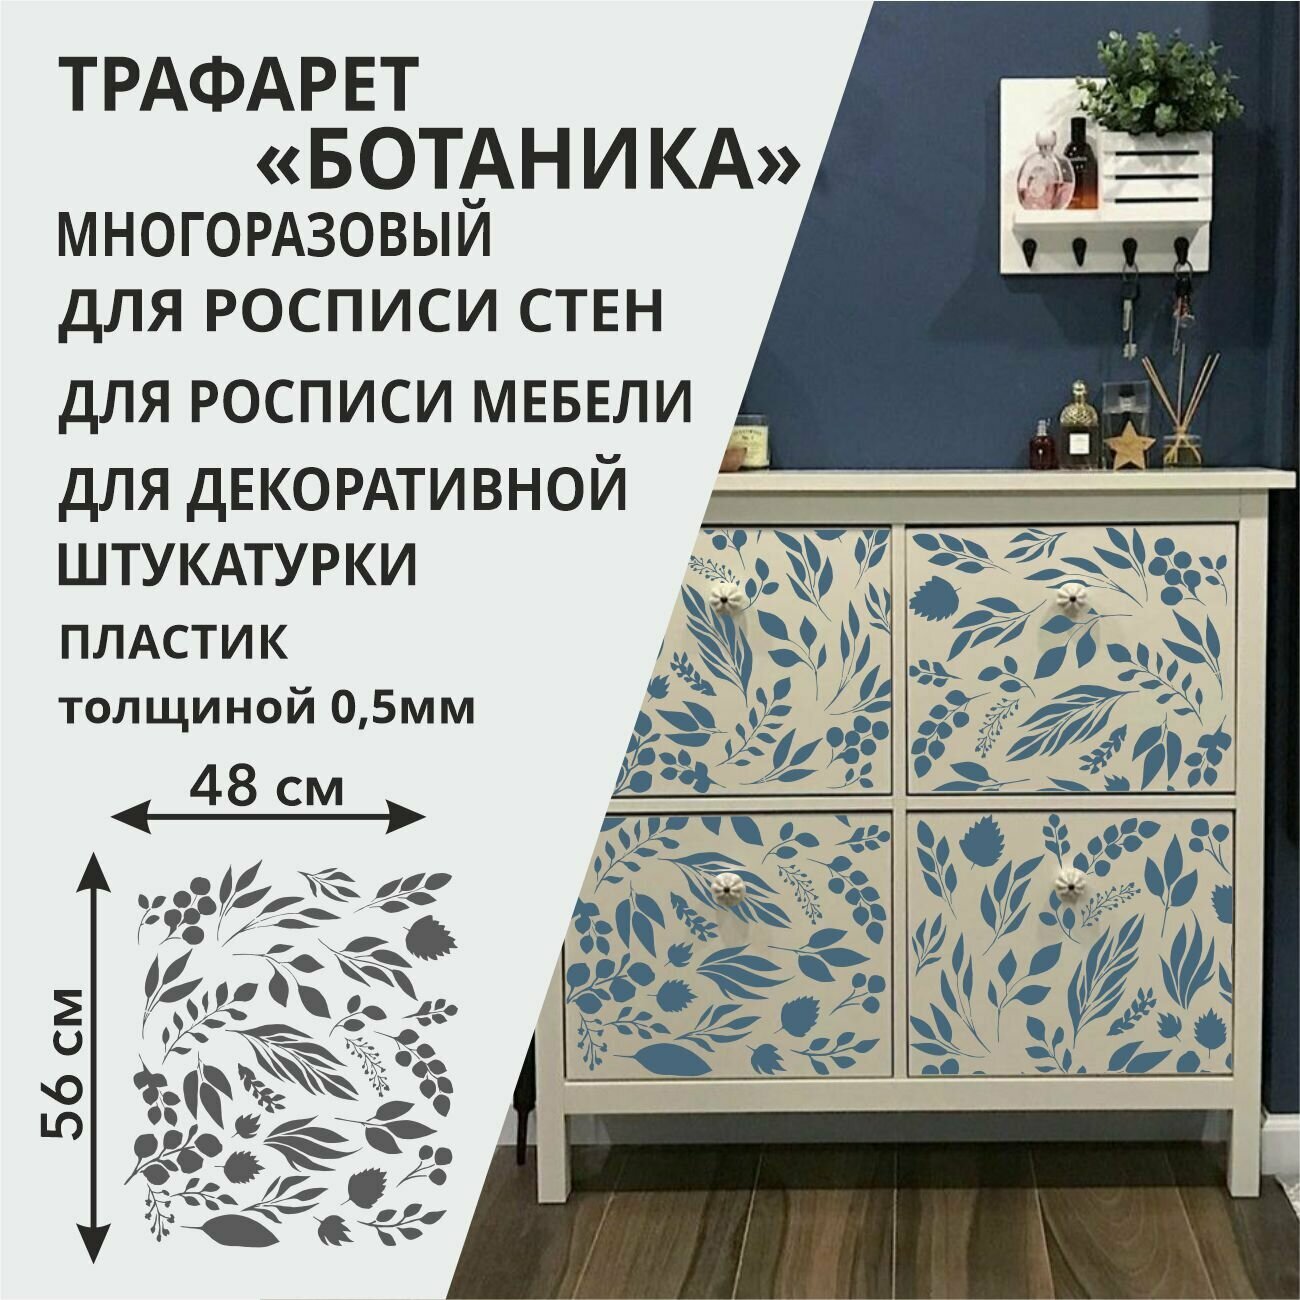 Трафарет "Ботаника" 60х52 см - для творчества и декора стен мебели плитки и штукатурки. Многоразовый пластик 05 мм